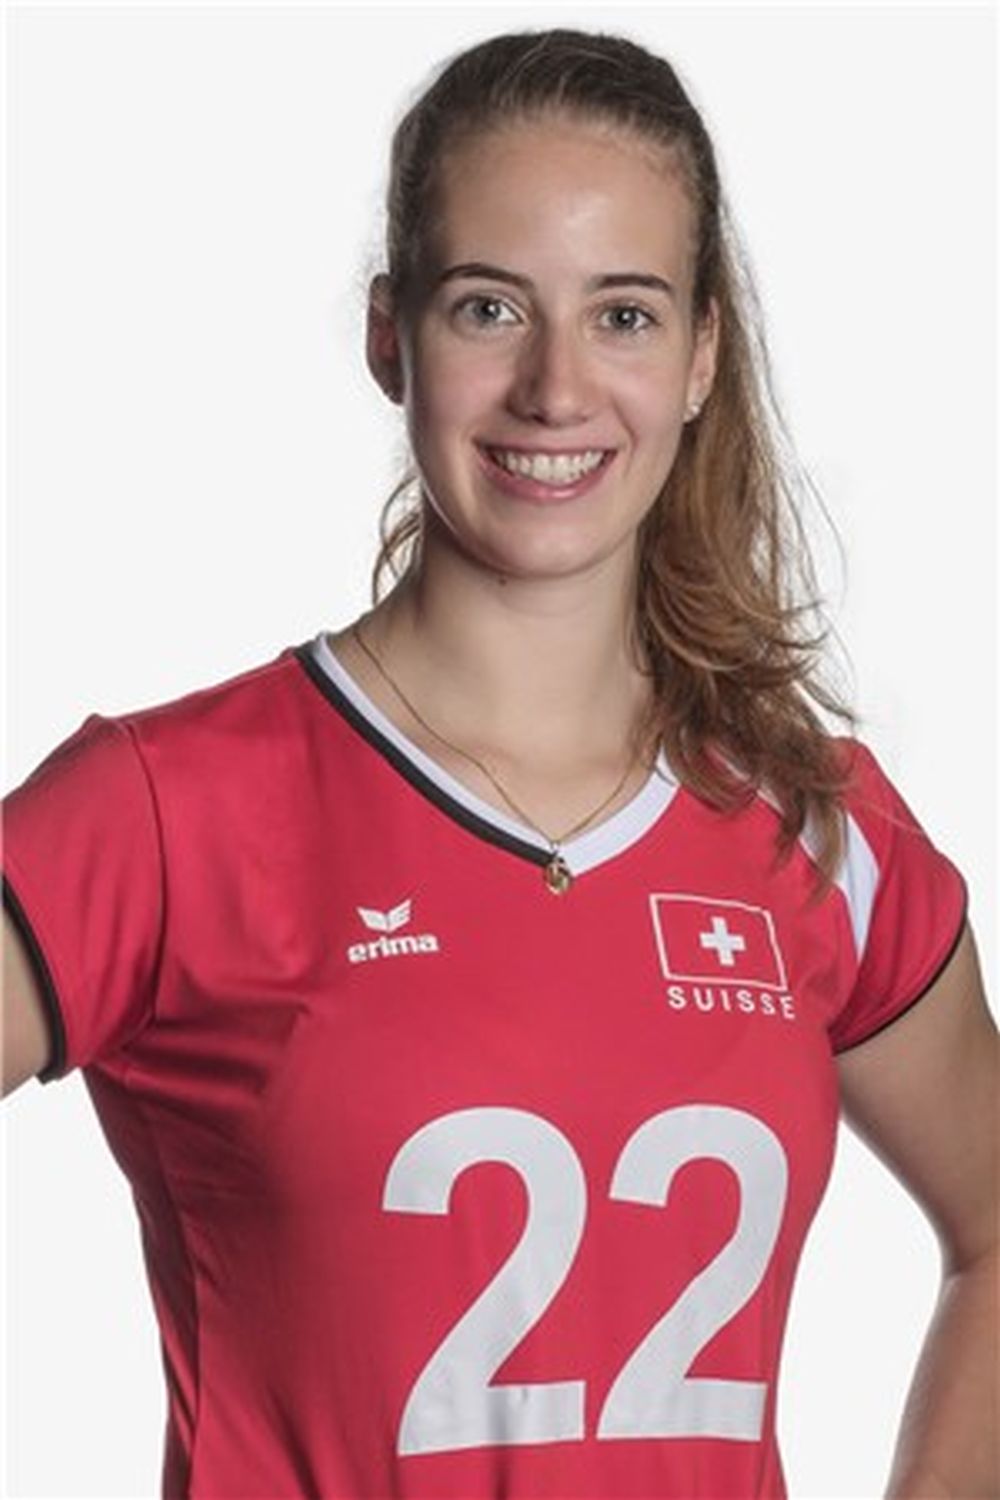 Samira Sulser rejoint le club franc-montagnard.